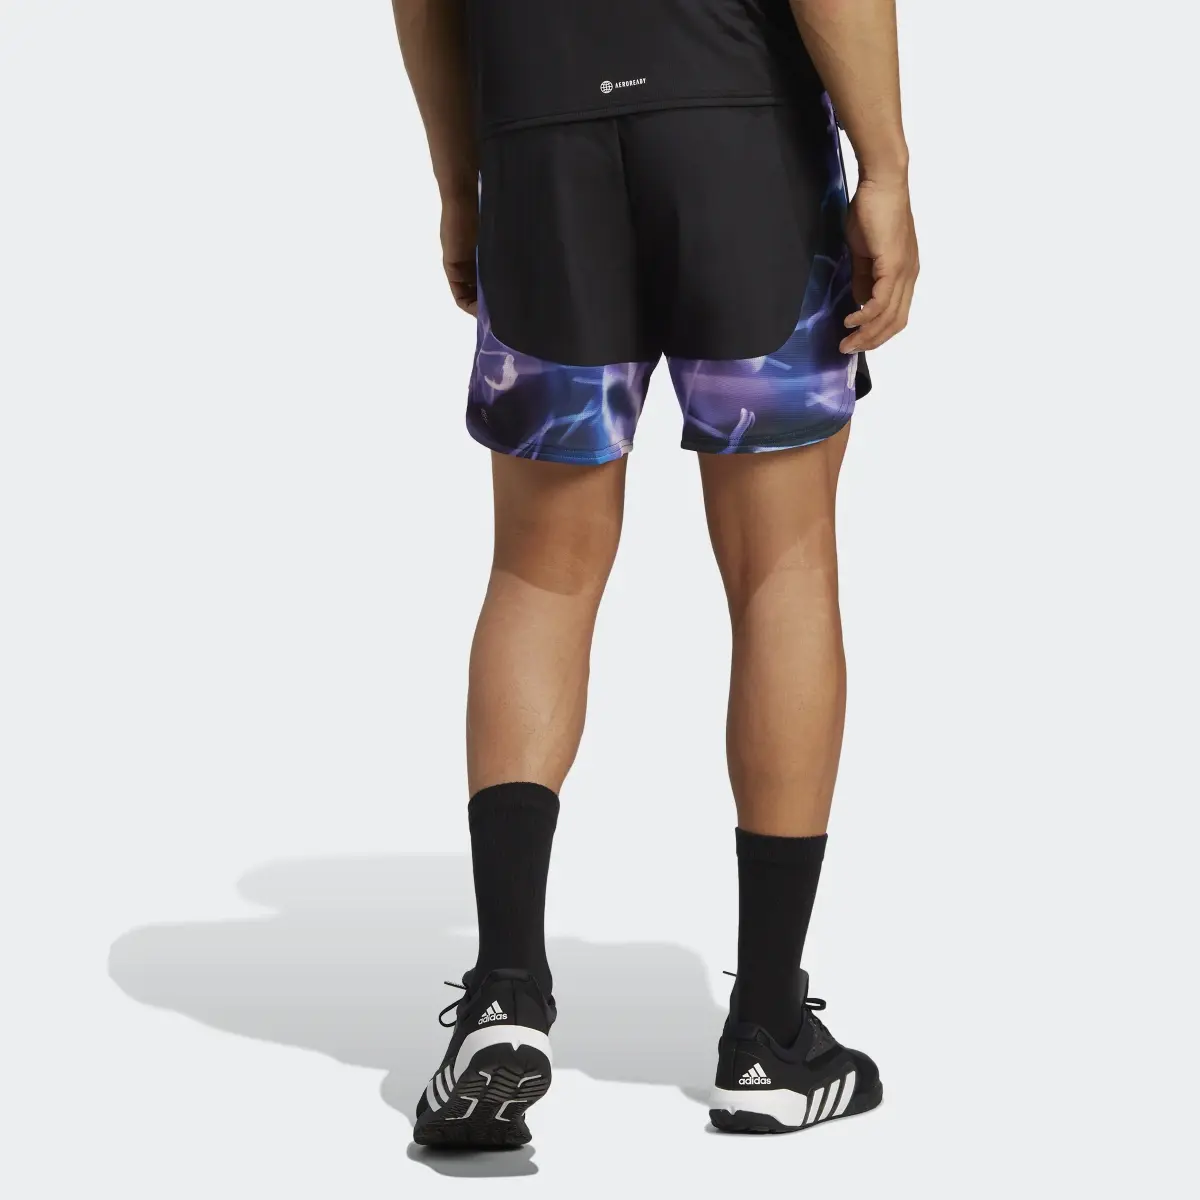 Adidas Designed for Movement HIIT Training Shorts. 2